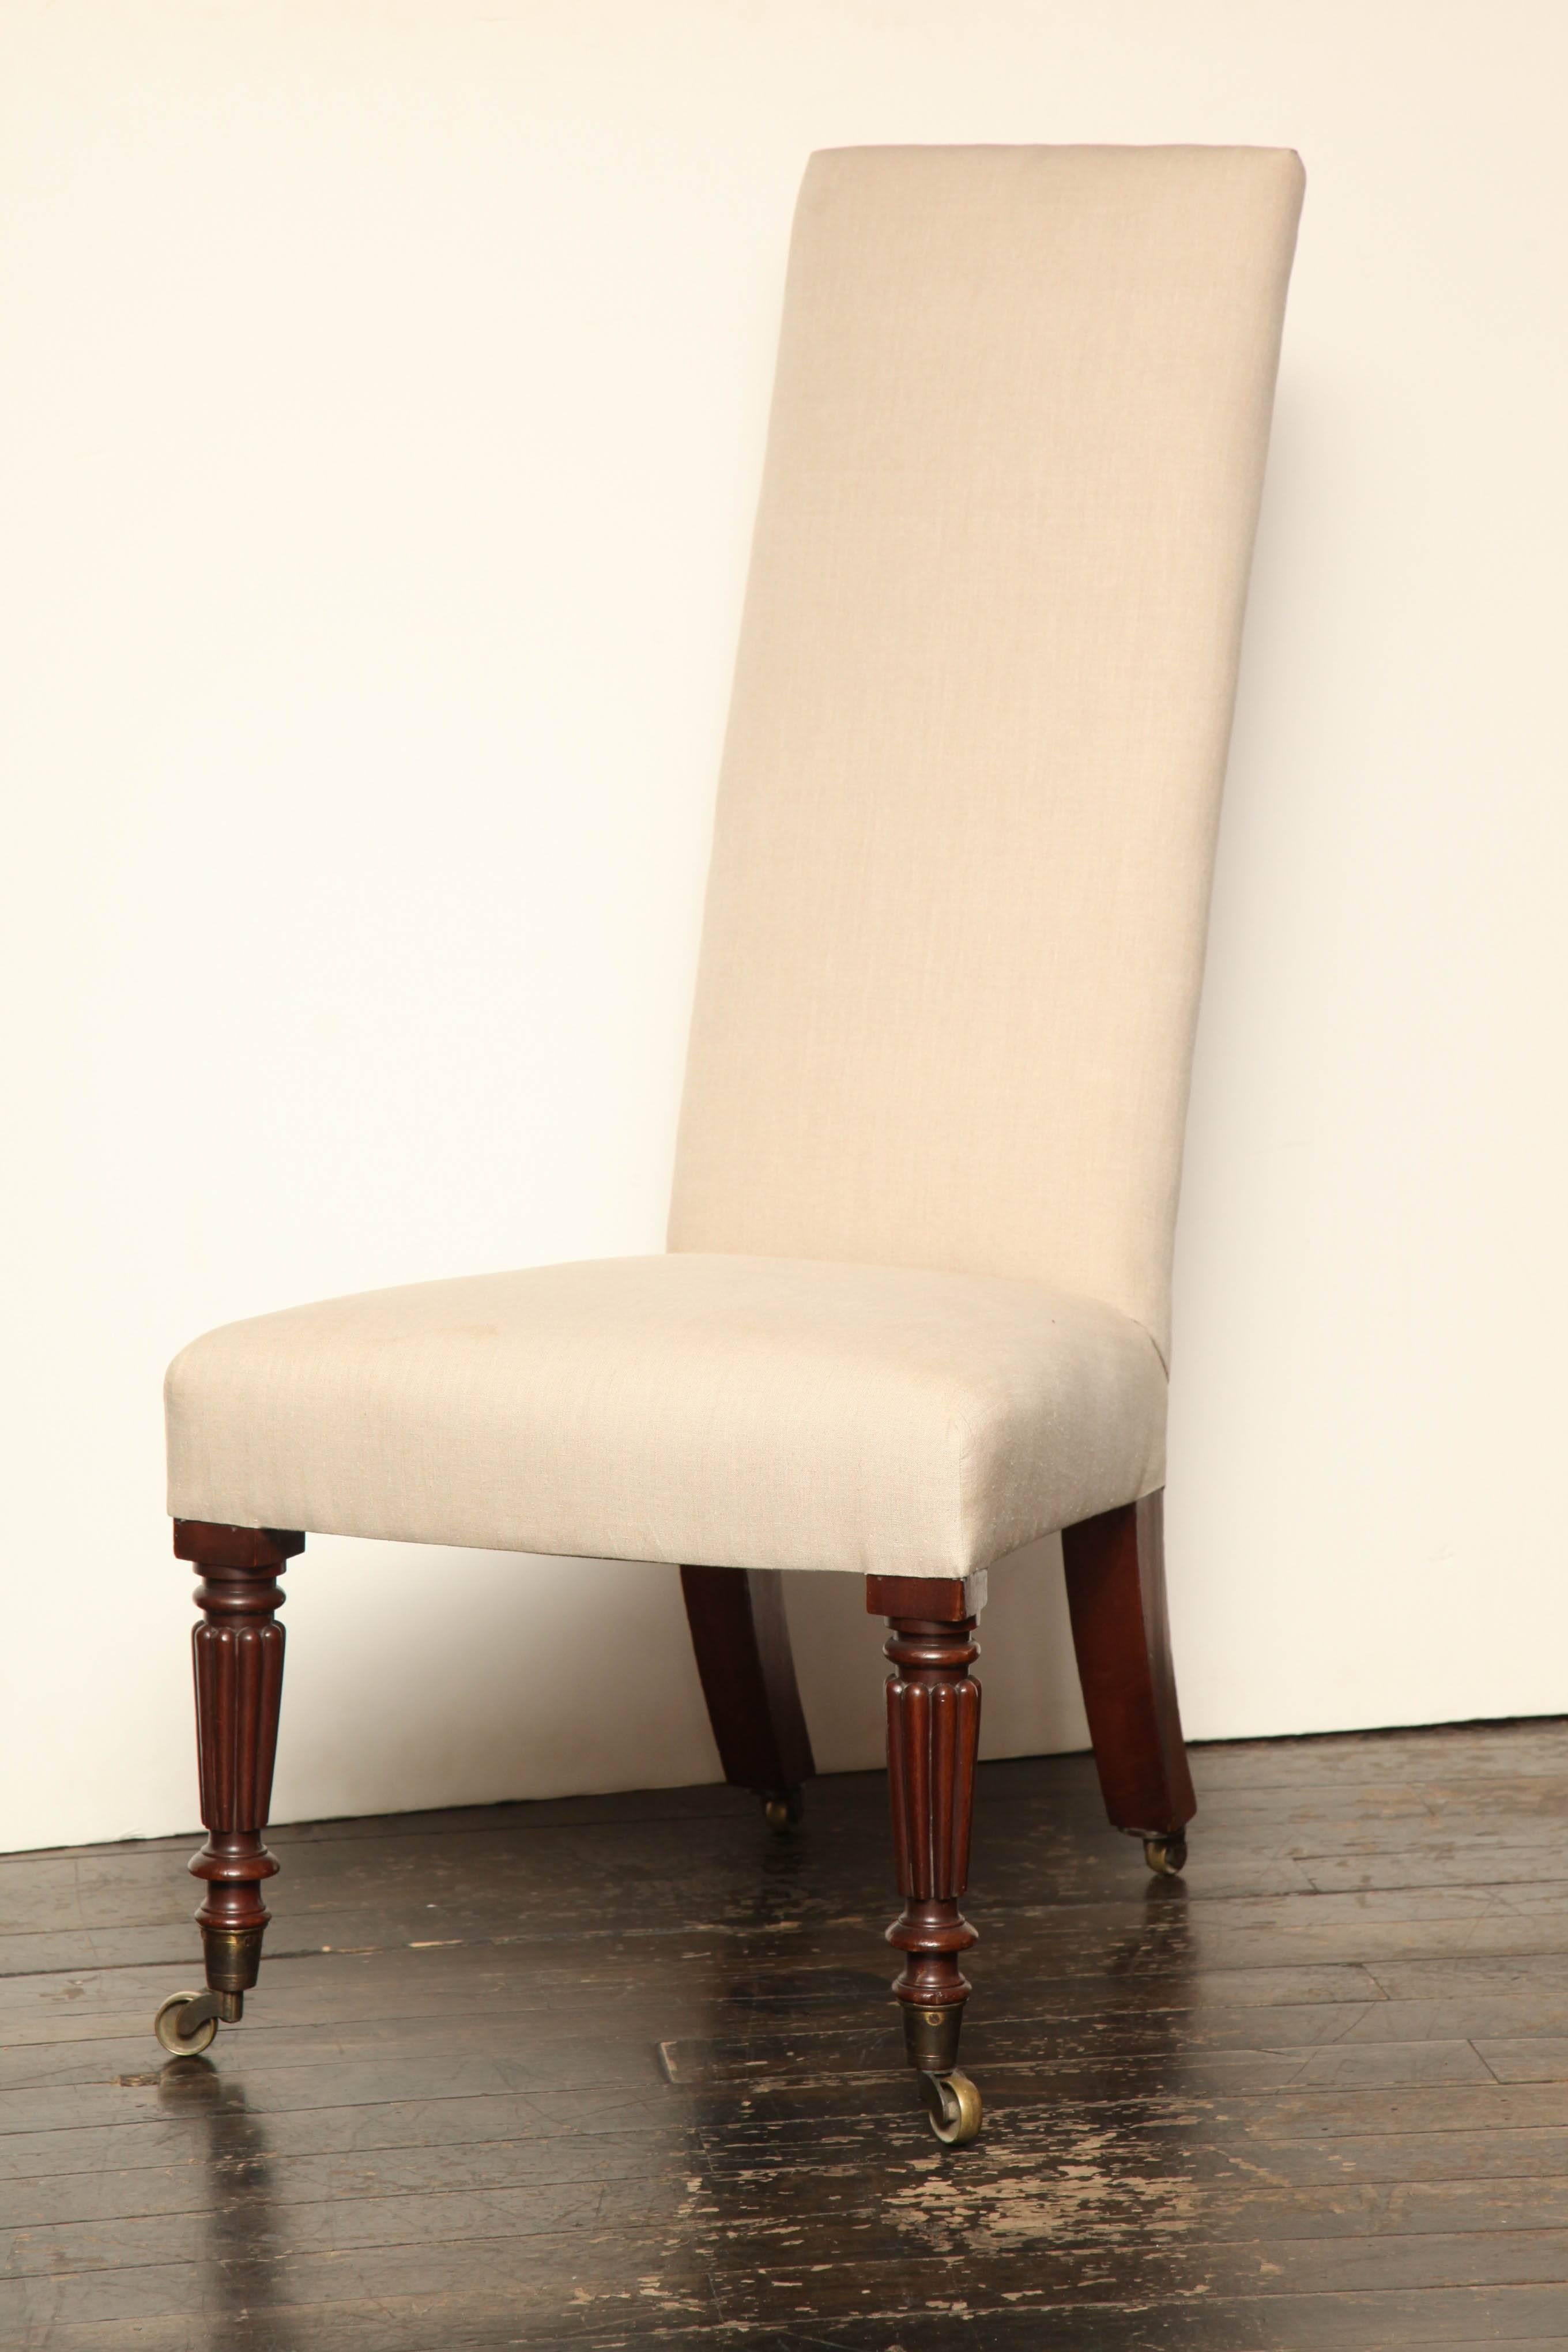 Great Britain (UK) Mid-19th Century English Mahogany High Back Chair